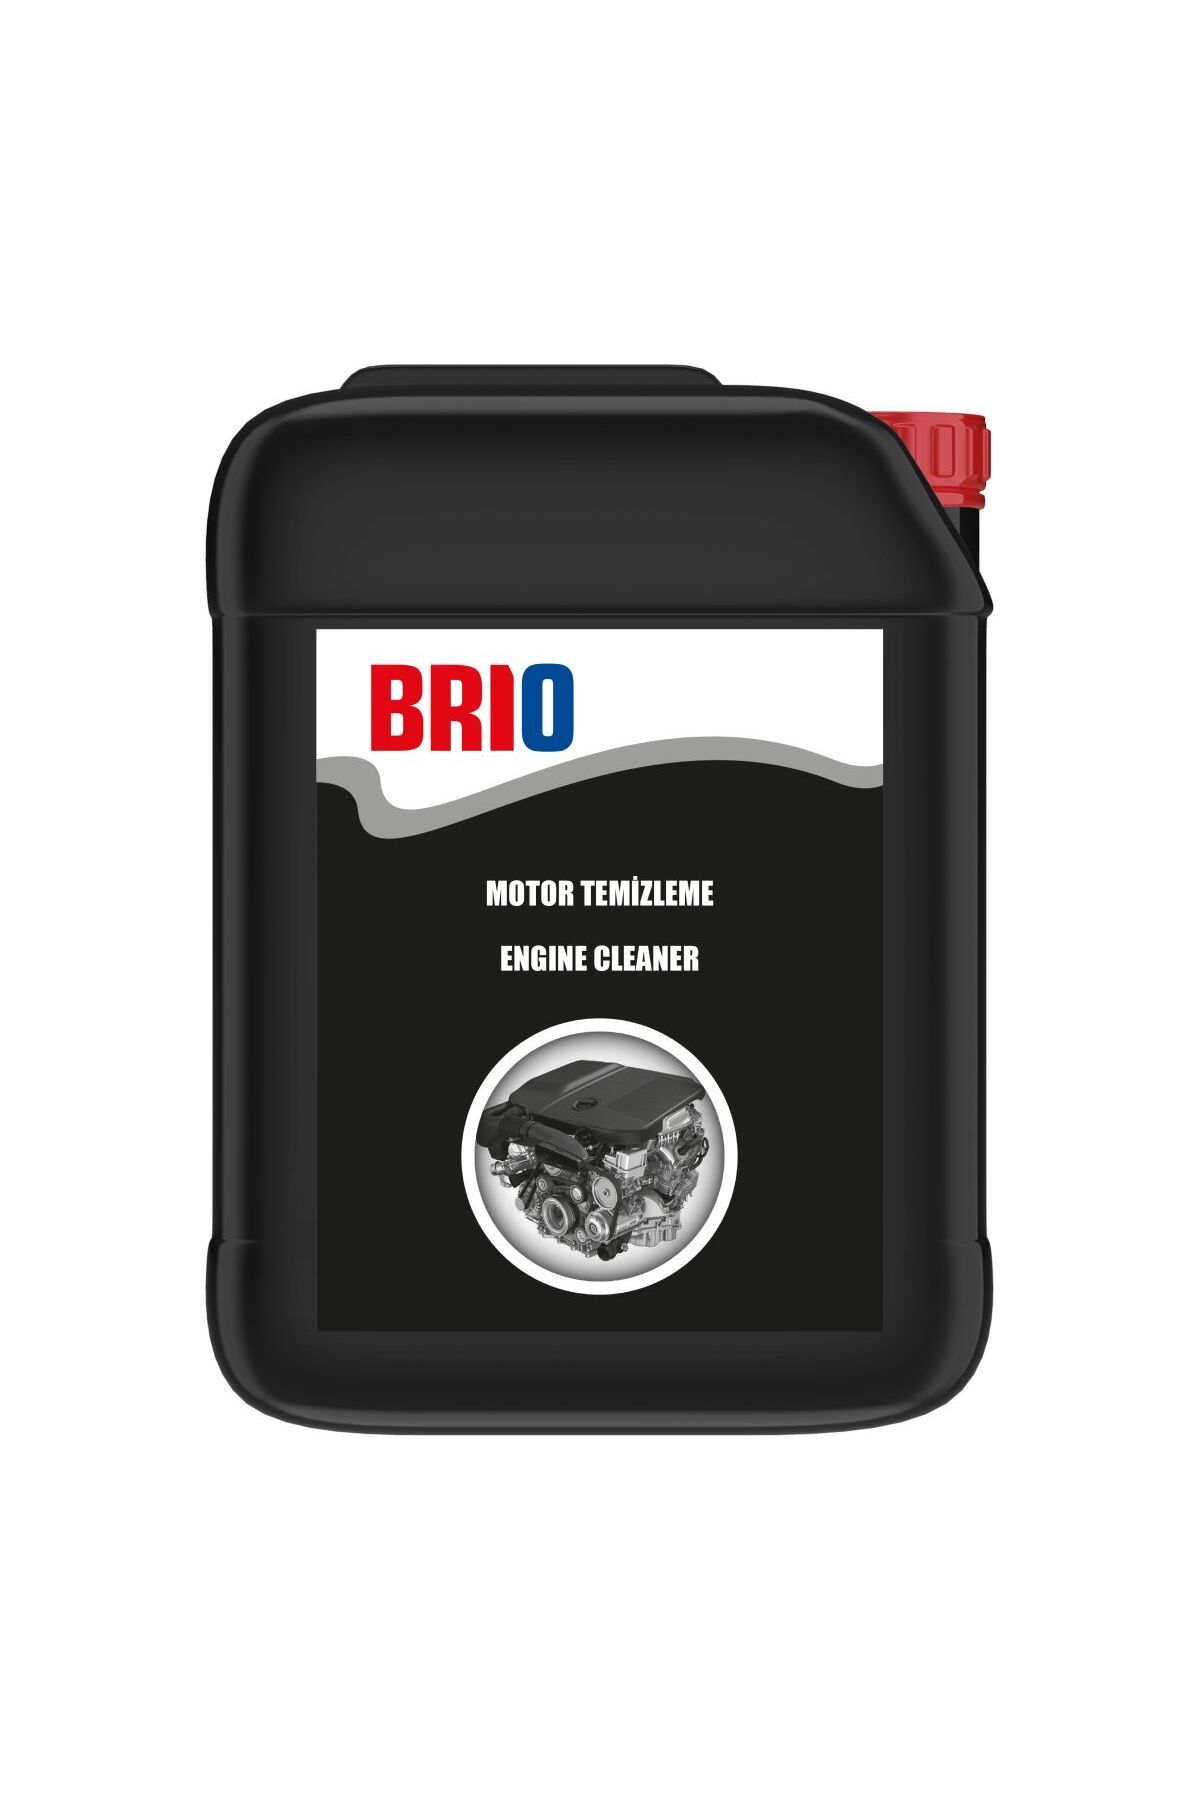 Brio Motor Temizleme Motor-branda-panelvan Araç Temizleme 5 L